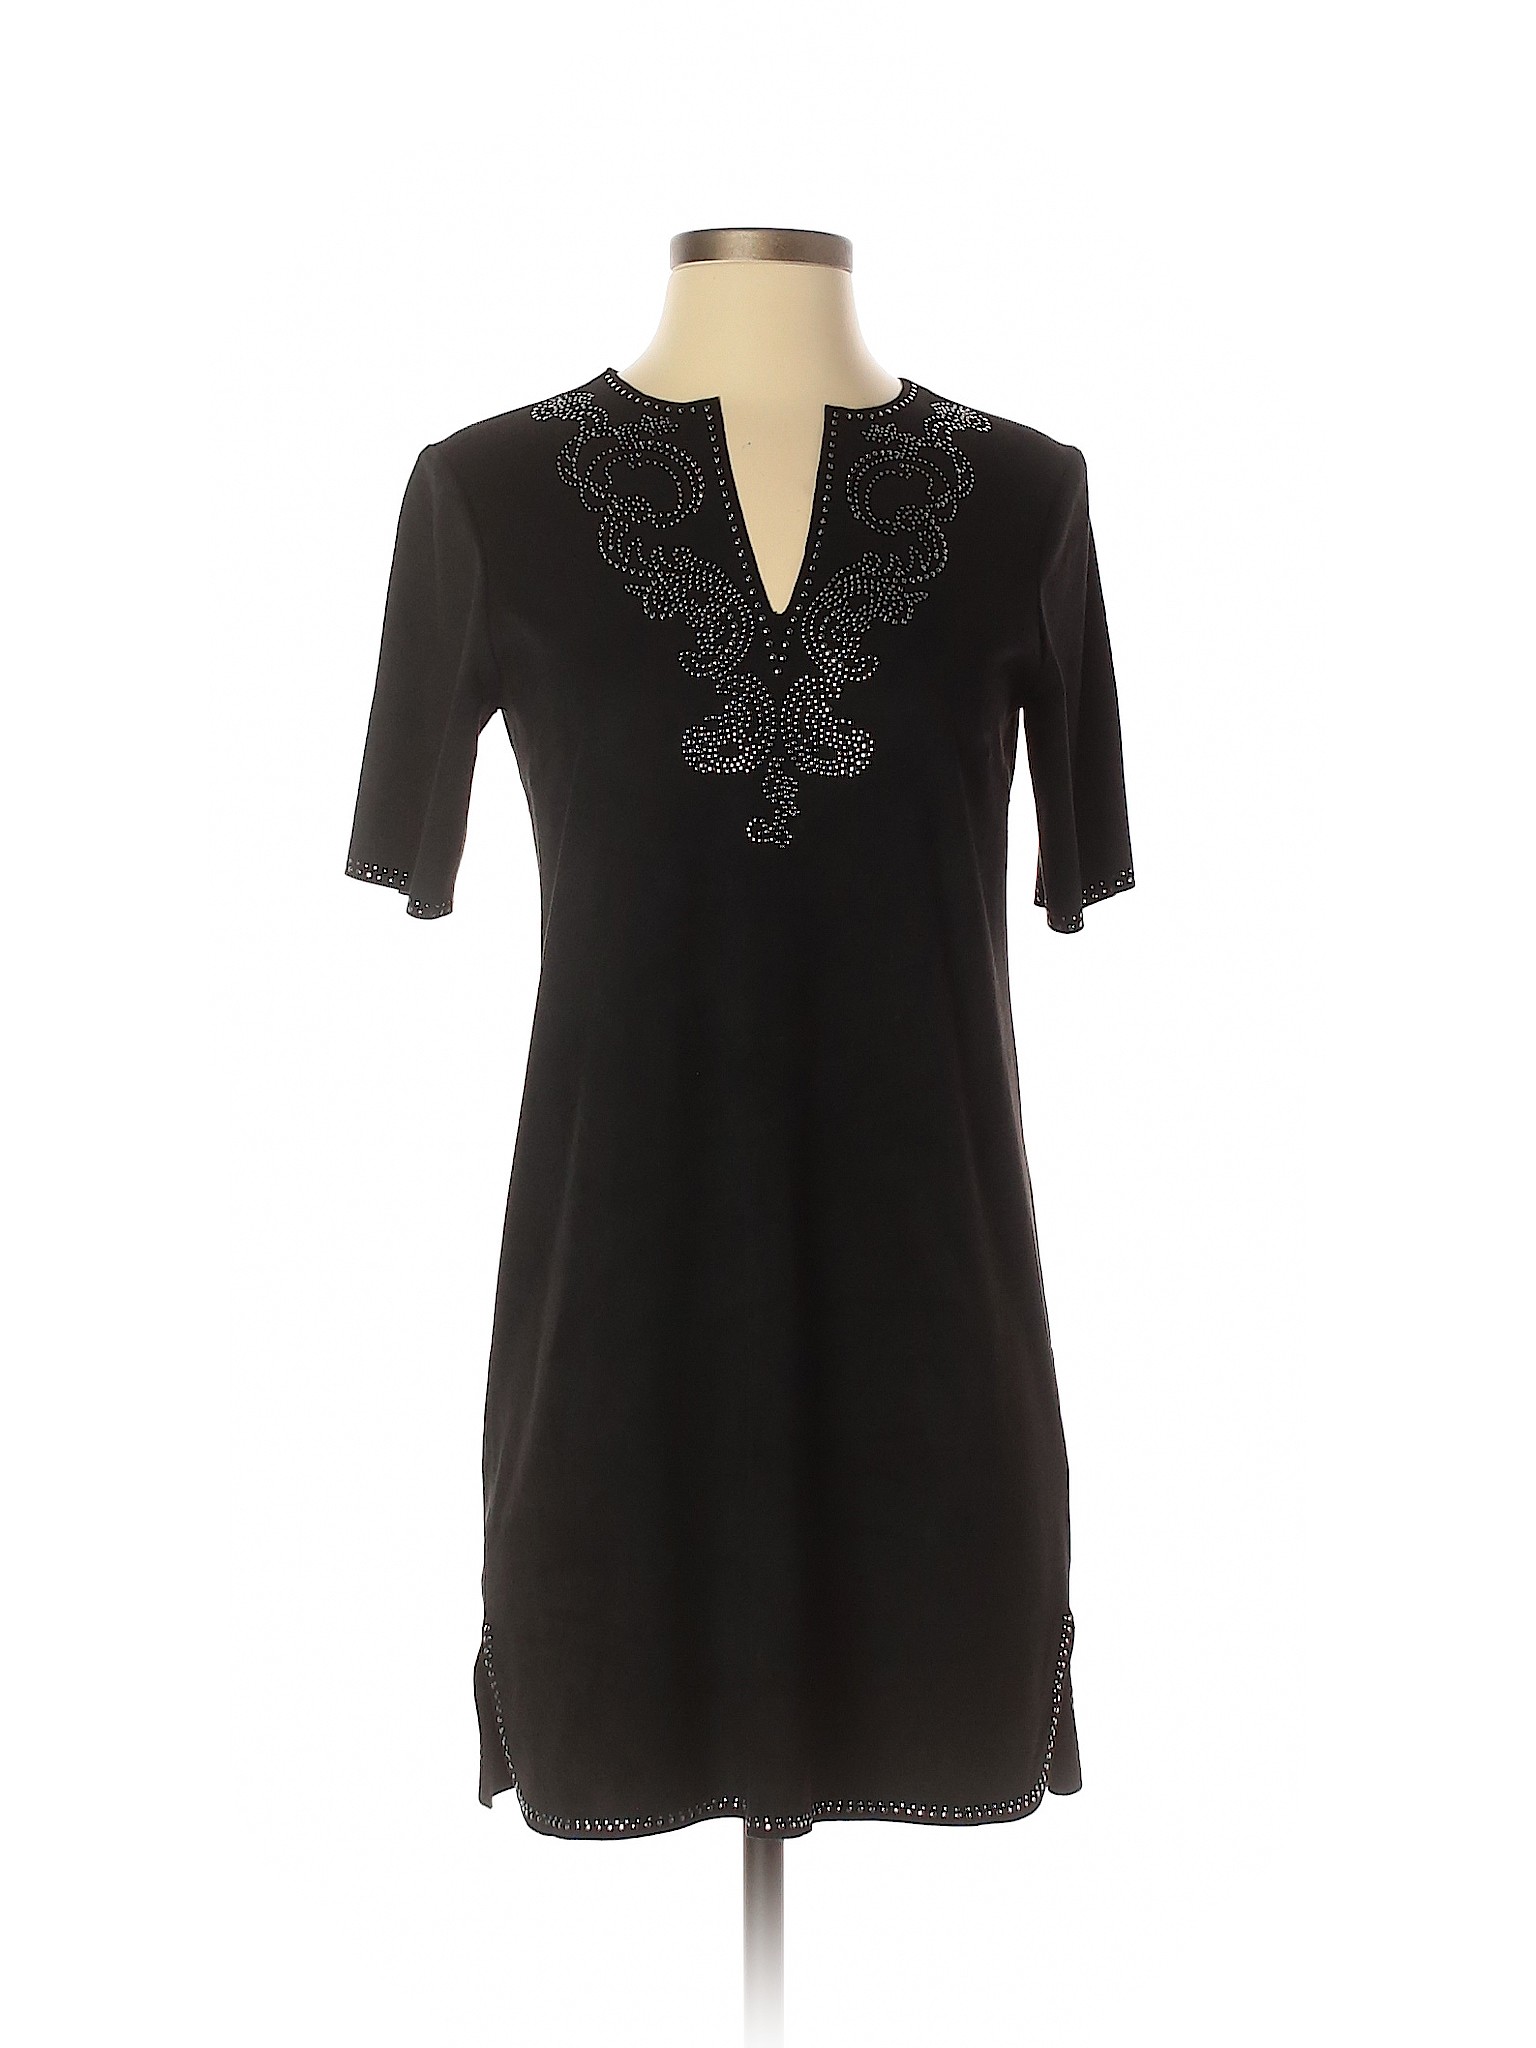 Zara Women Black Cocktail Dress XS | eBay